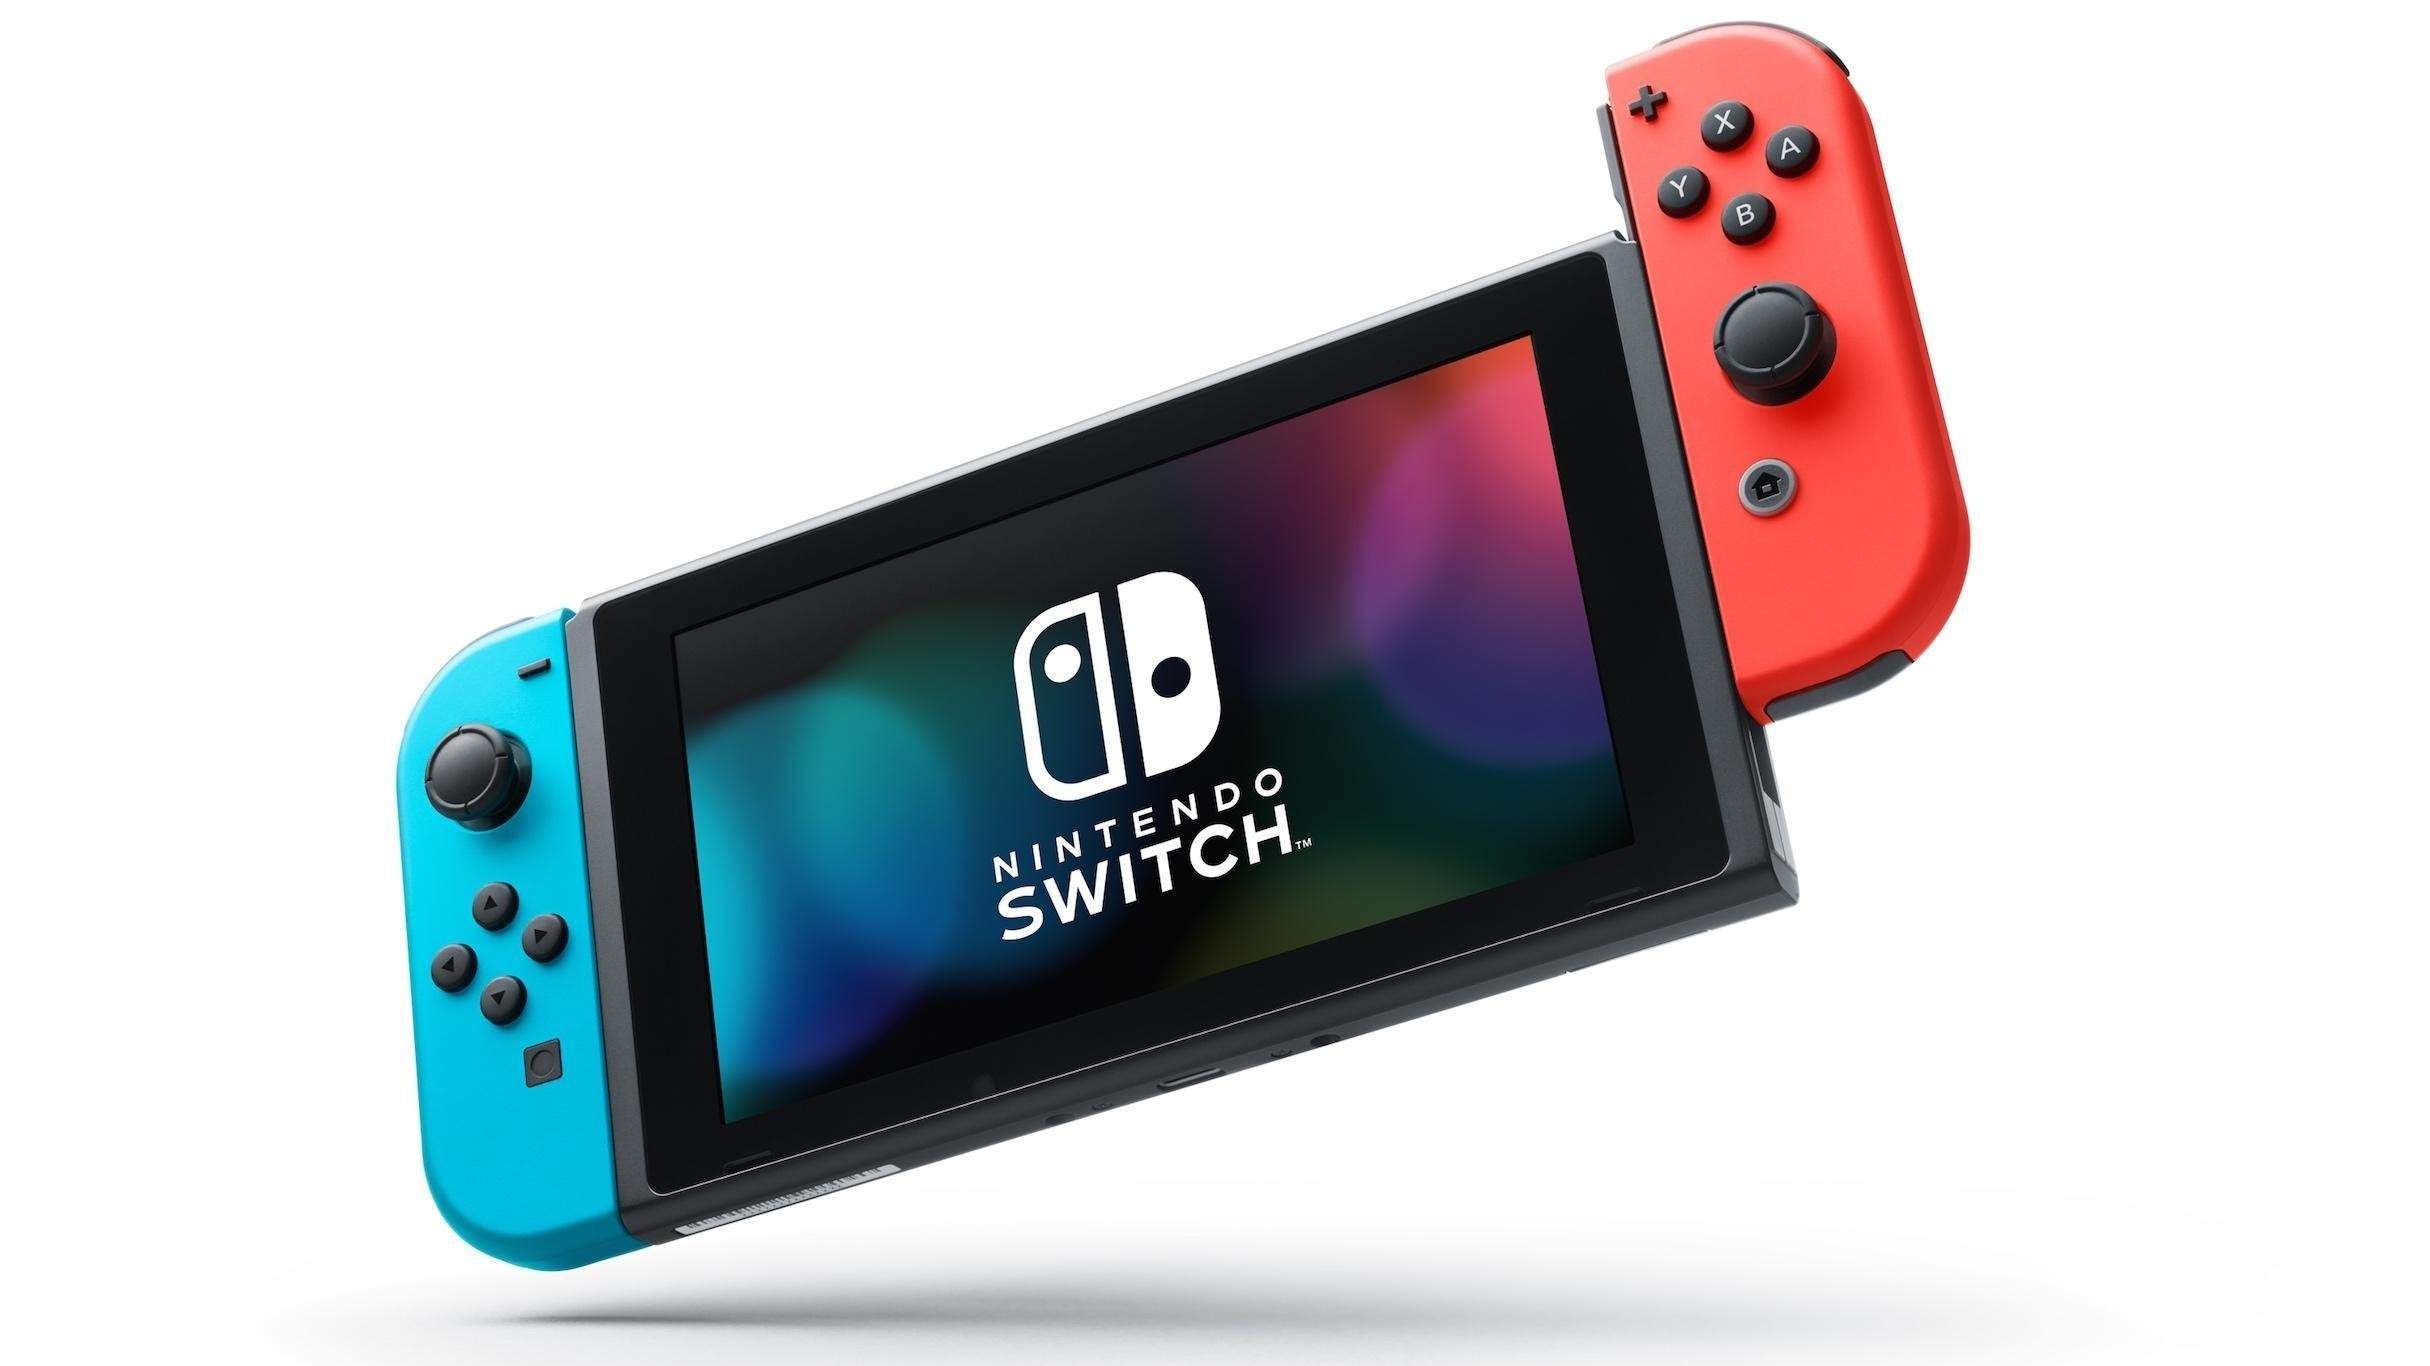 Продажи Nintendo Switch обогнали GameCube и достигли 22.86 миллиона устройств